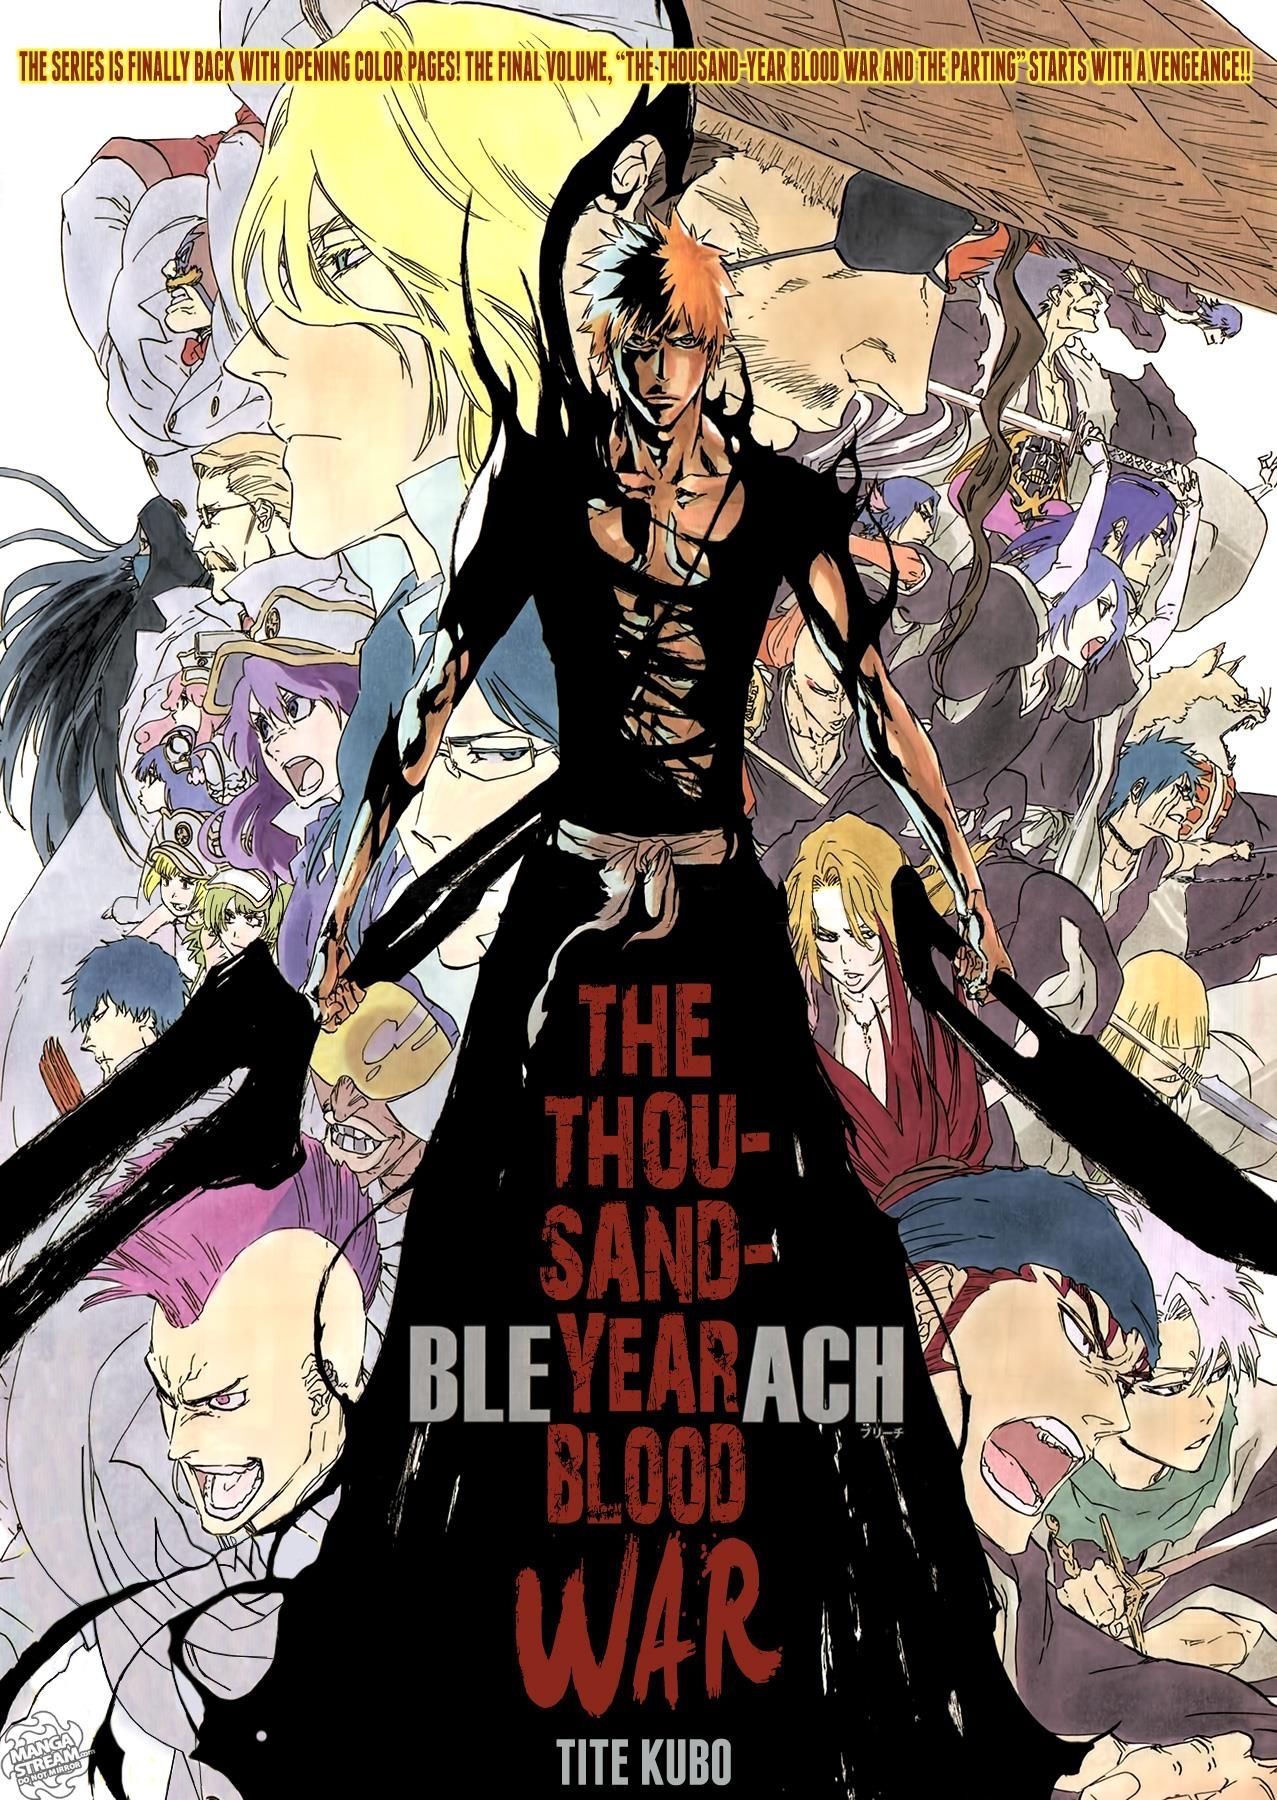 Bleach Thousand Year Blood War Anime Wallpaper 4k HD ID:11093